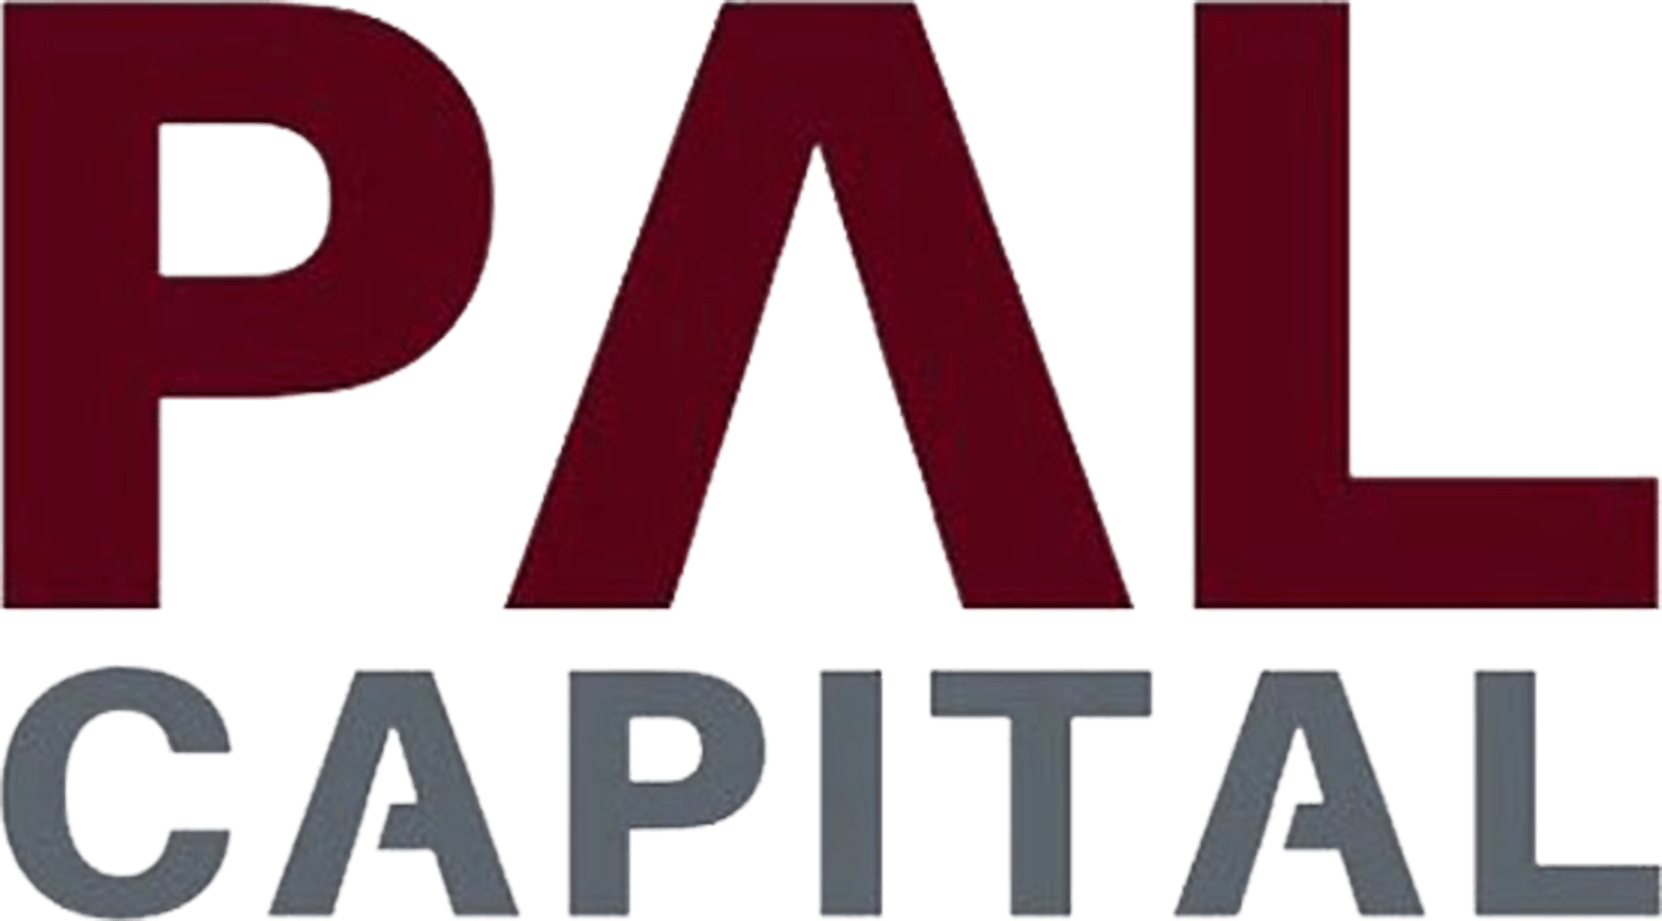 pal capital